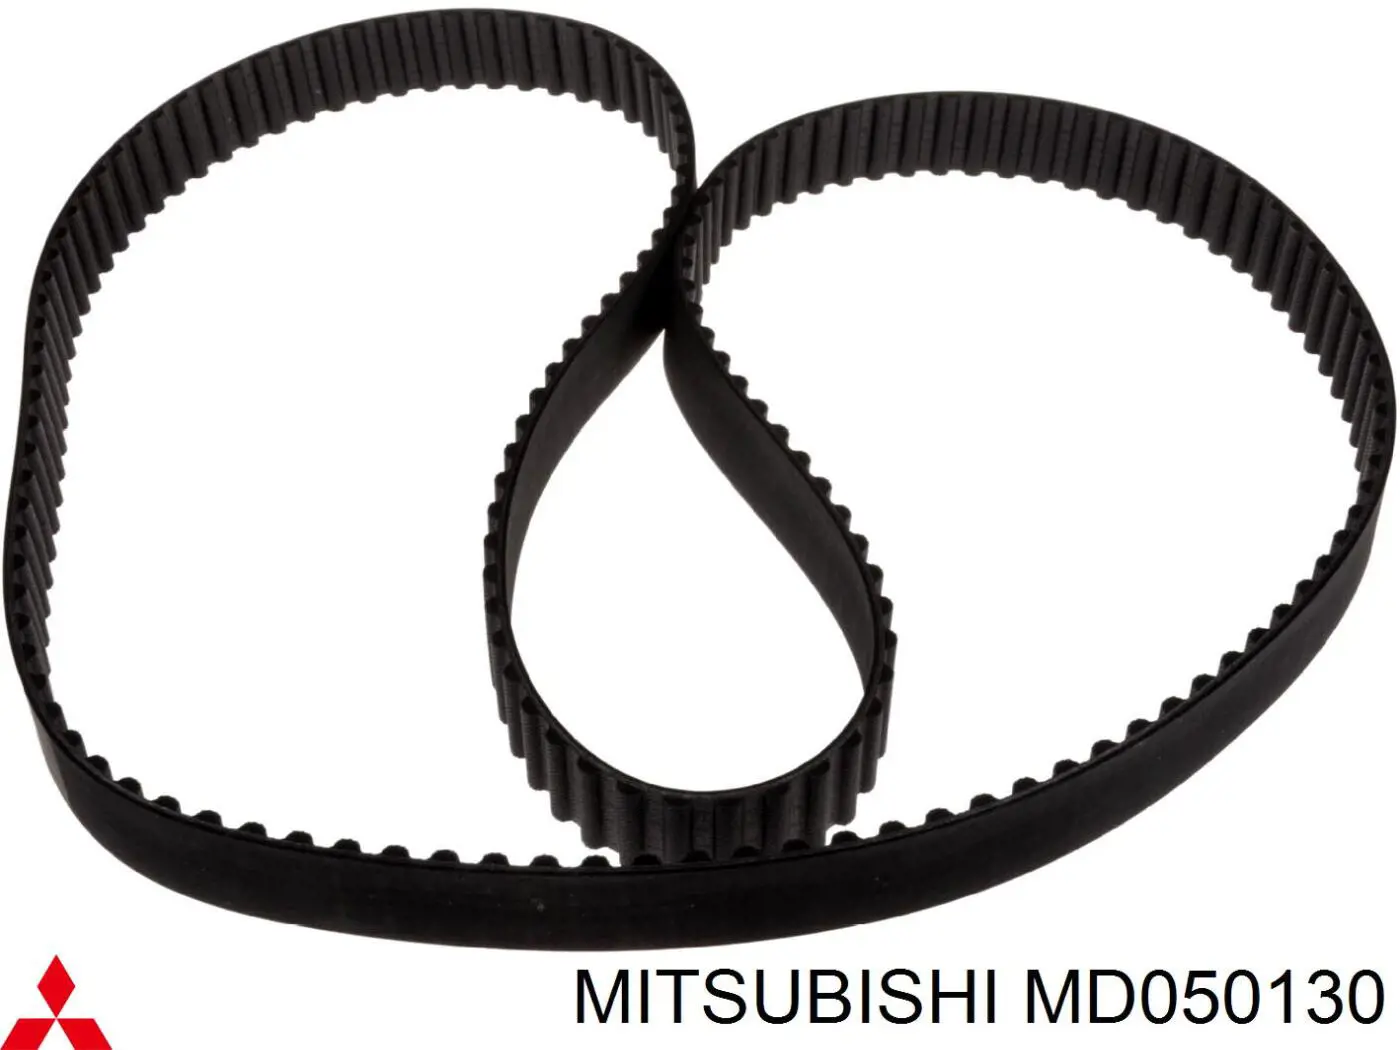 MD050130 Mitsubishi ремень грм